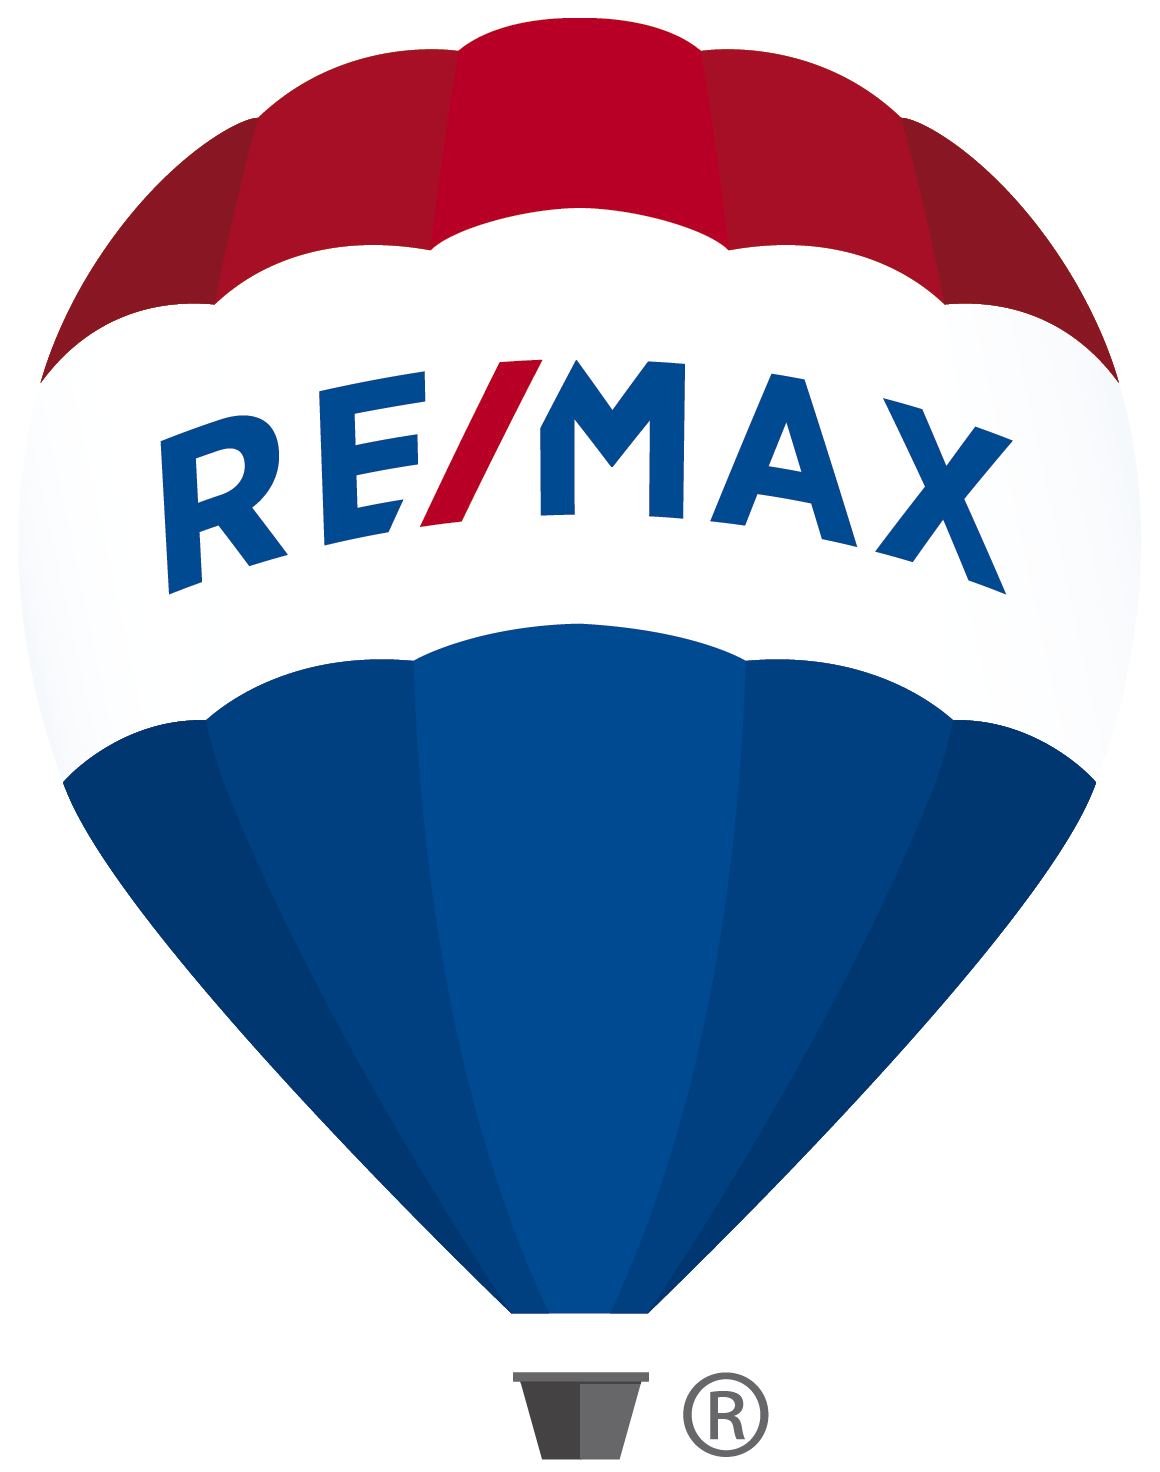 RE/MAX balloon logo CMYK